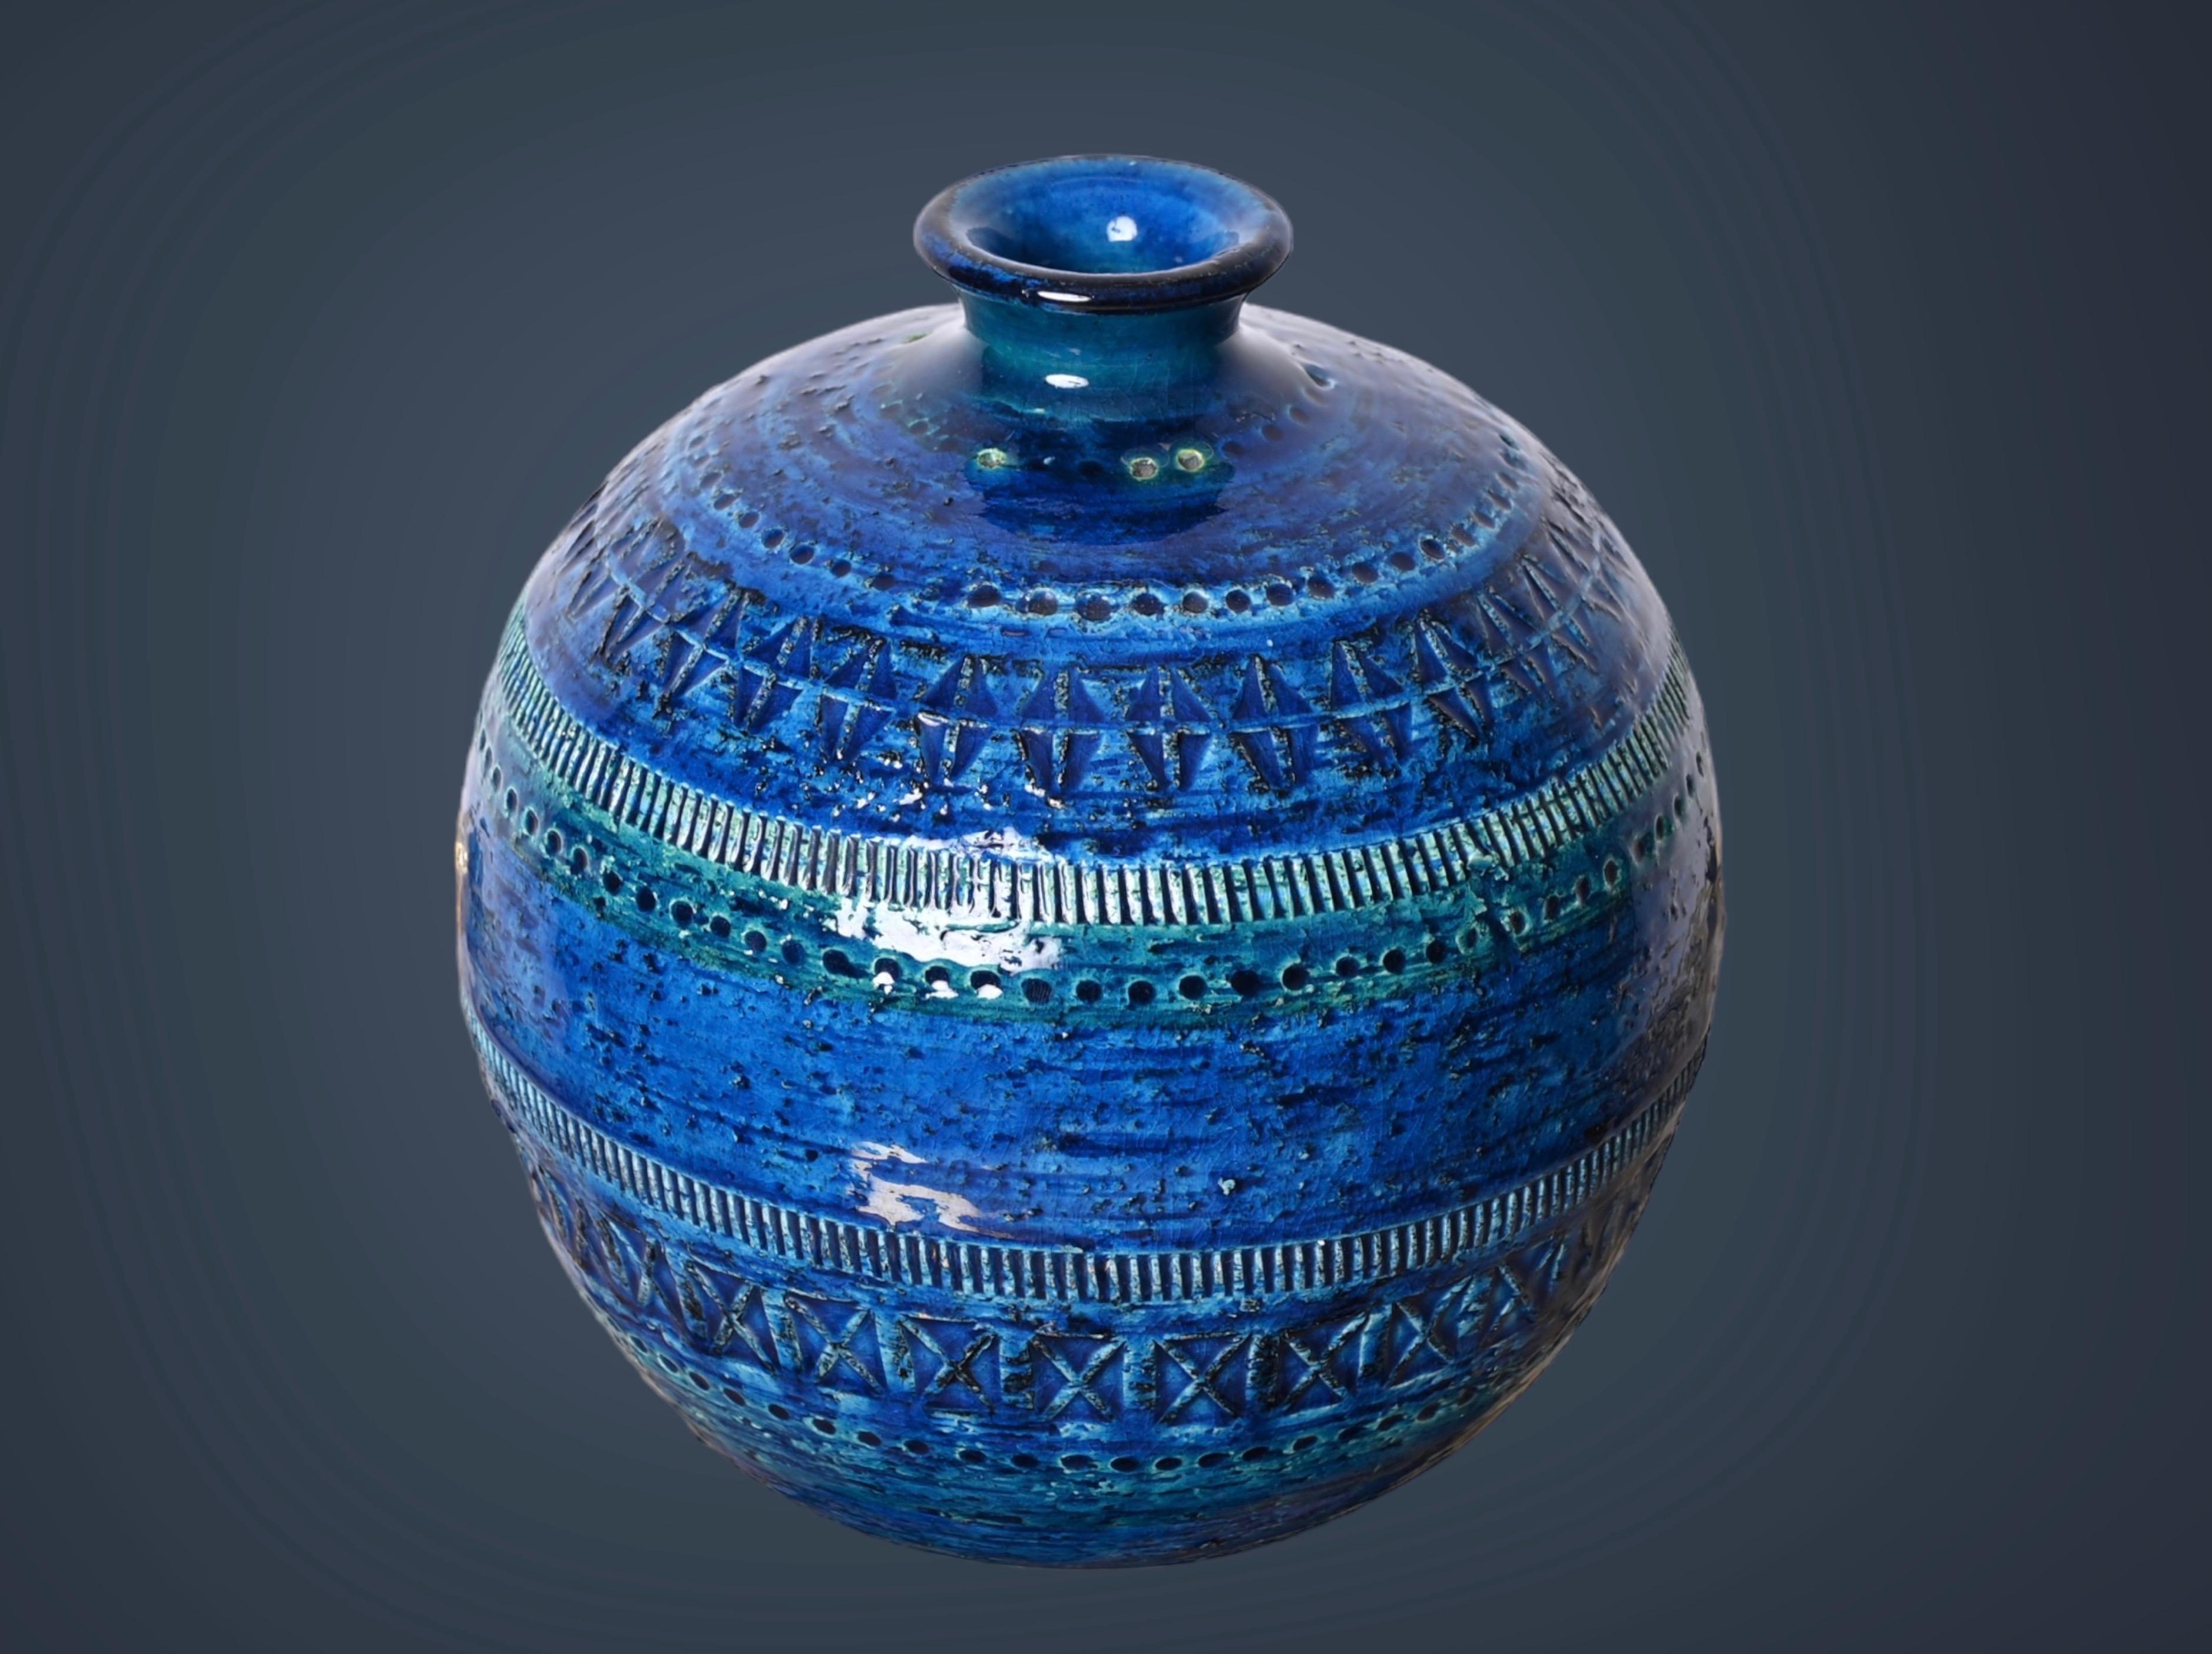 Aldo Londi Terrakotta-Keramikvase Rimini Blue für Bitossi, Italien, 1960er Jahre (20. Jahrhundert) im Angebot